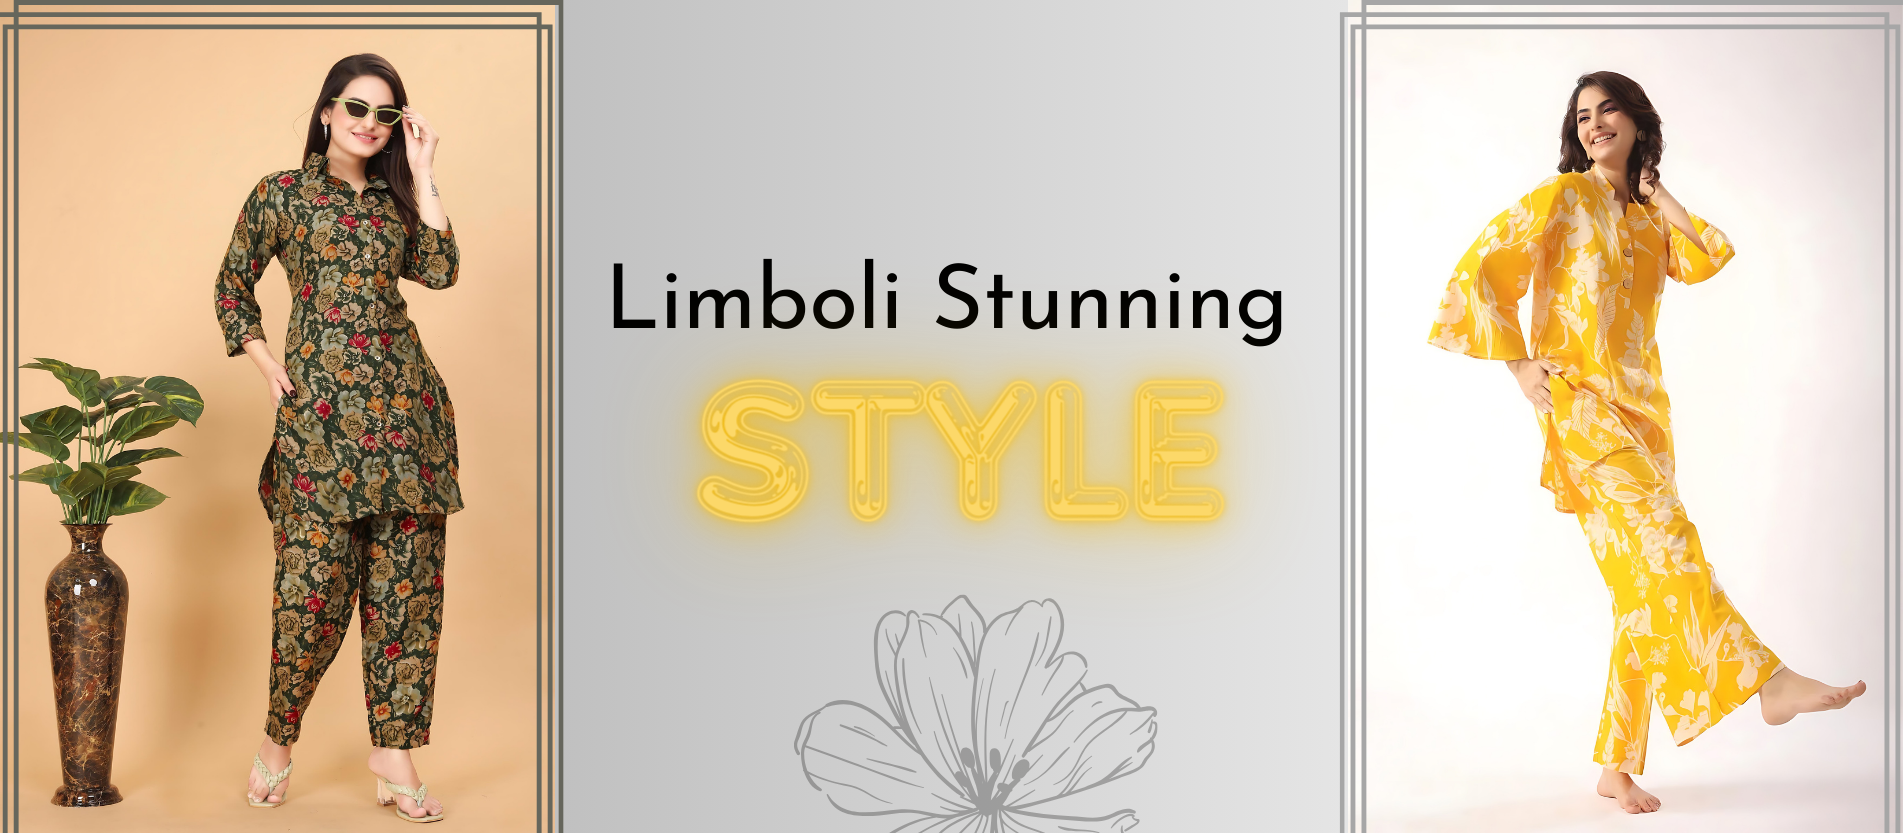 Limboli Fashion managed by JJ CREATION